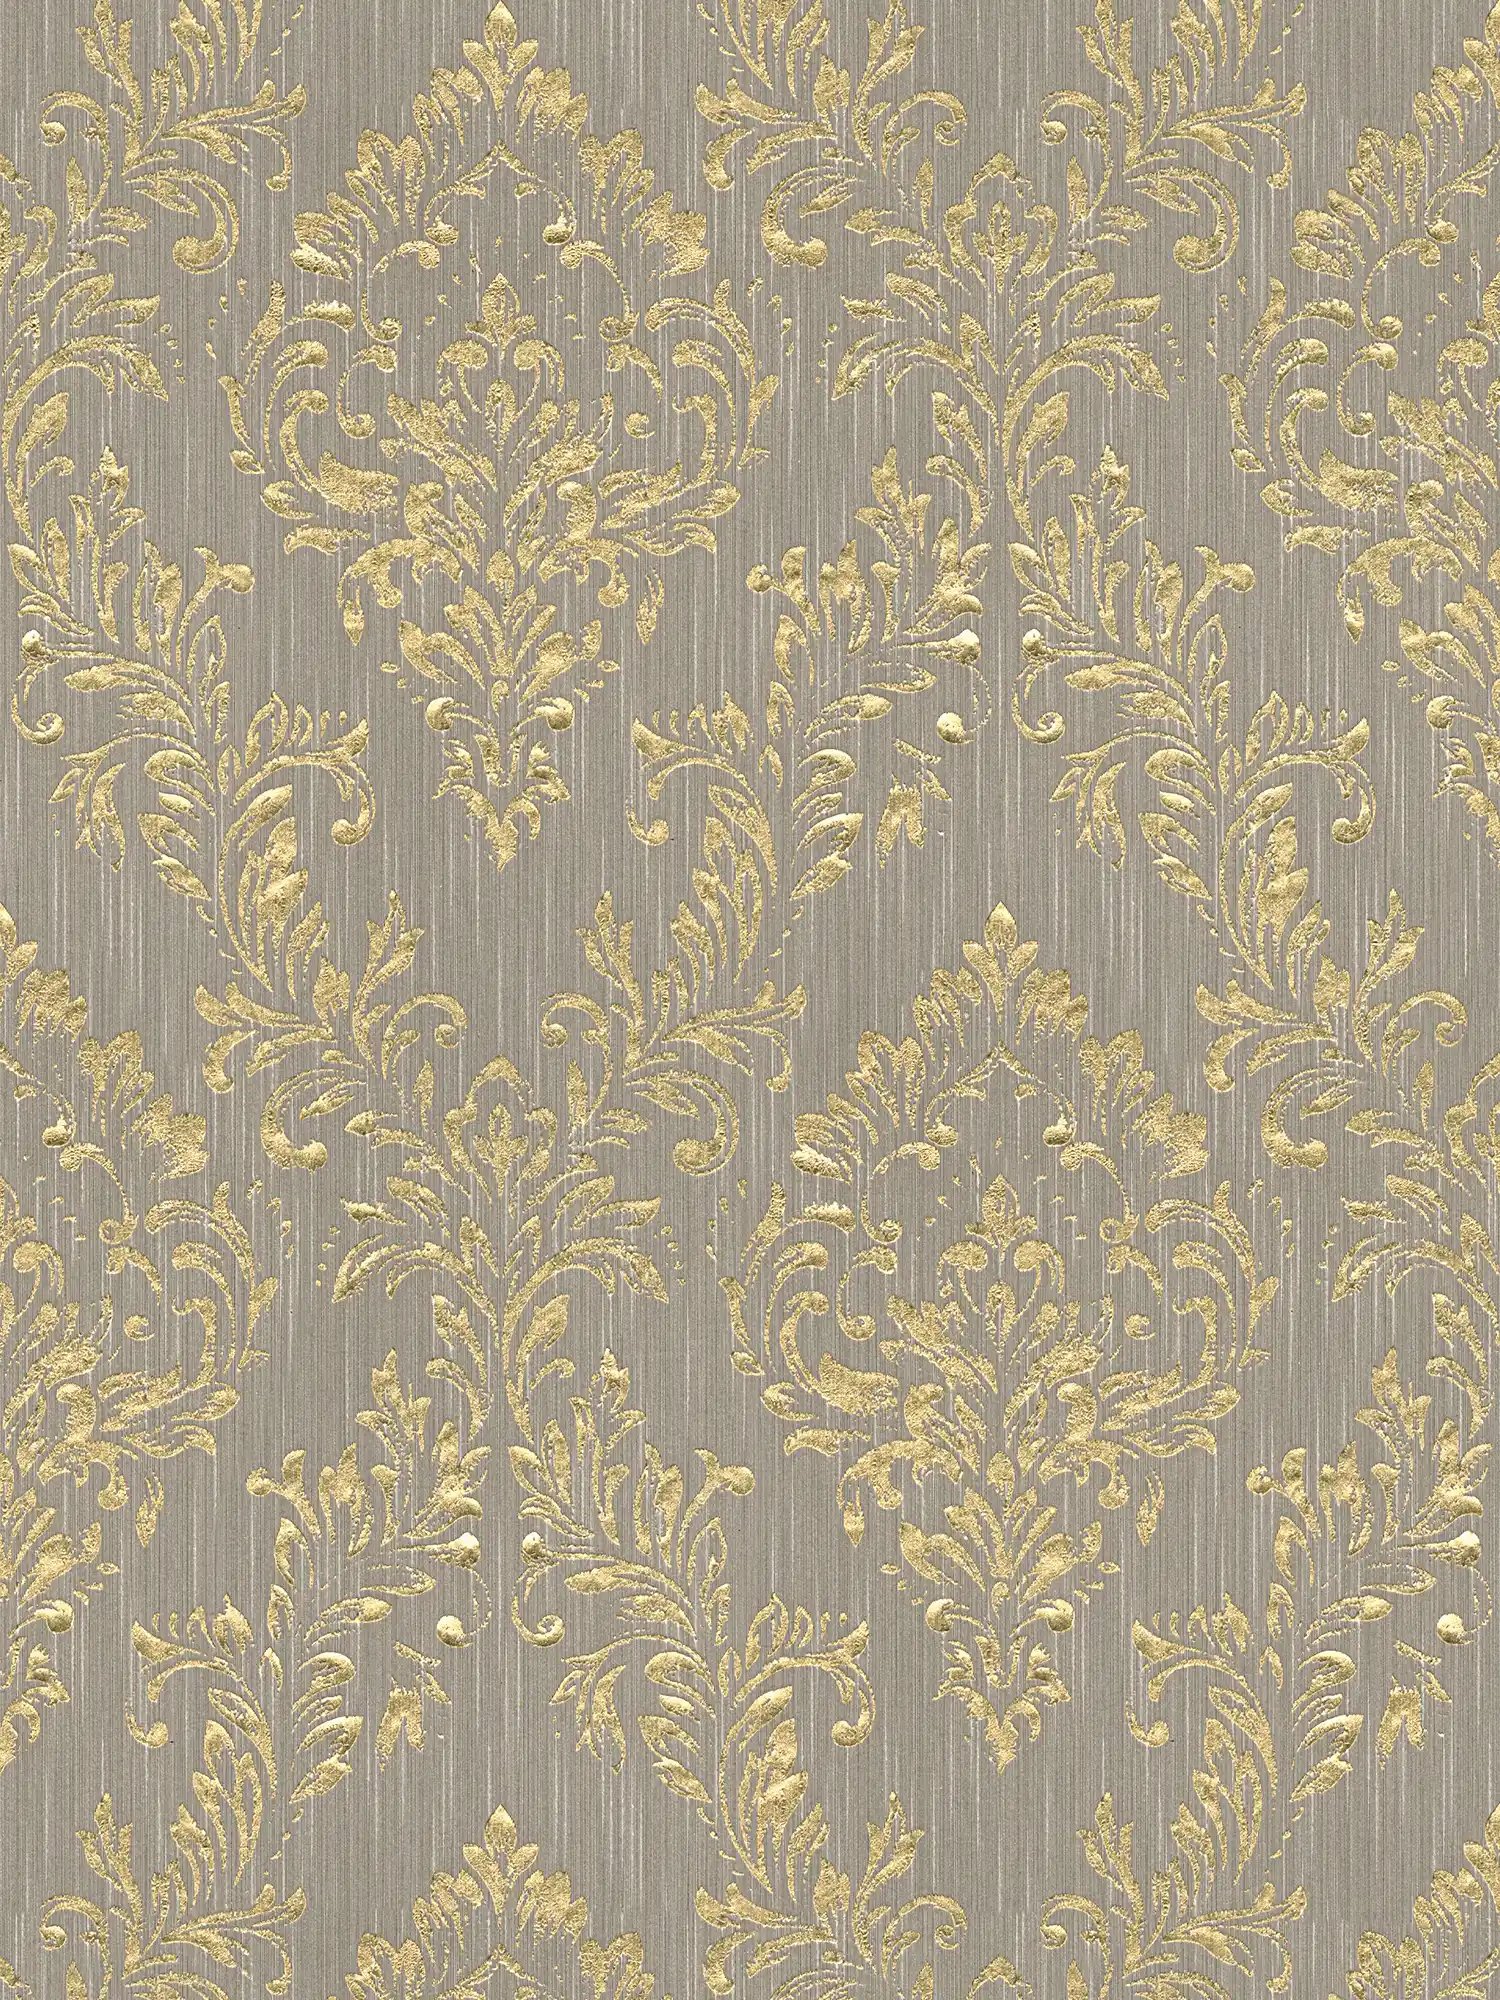 Ornament-Tapete floral mit goldenem Glitzer-Effekt – Gold, Beige
